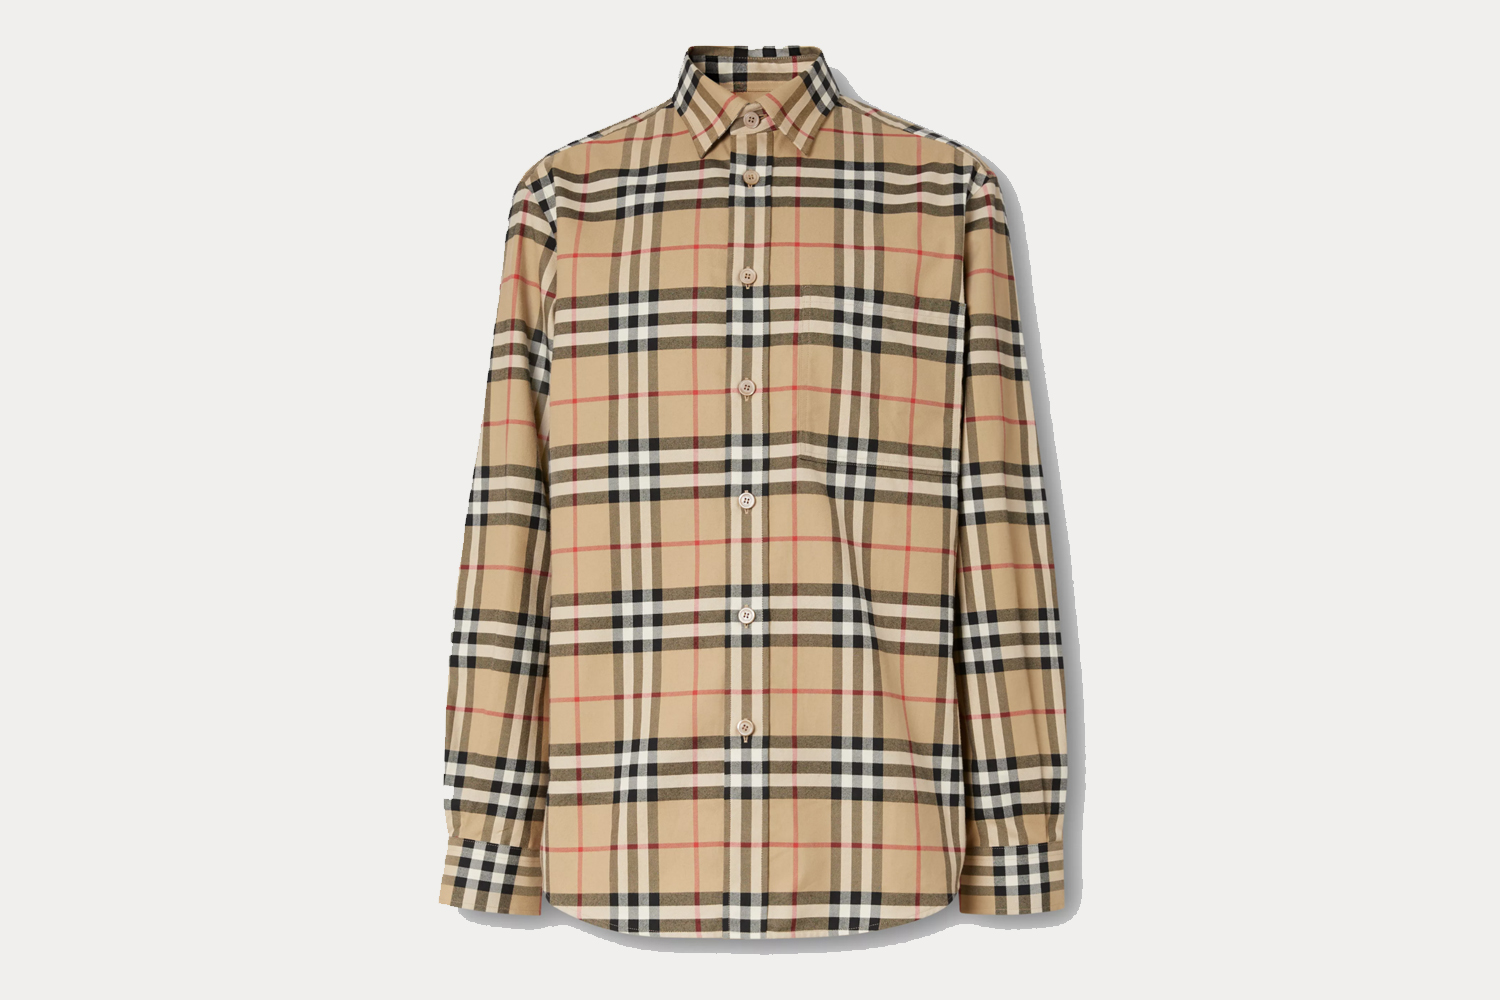 Burberry flannel shirt